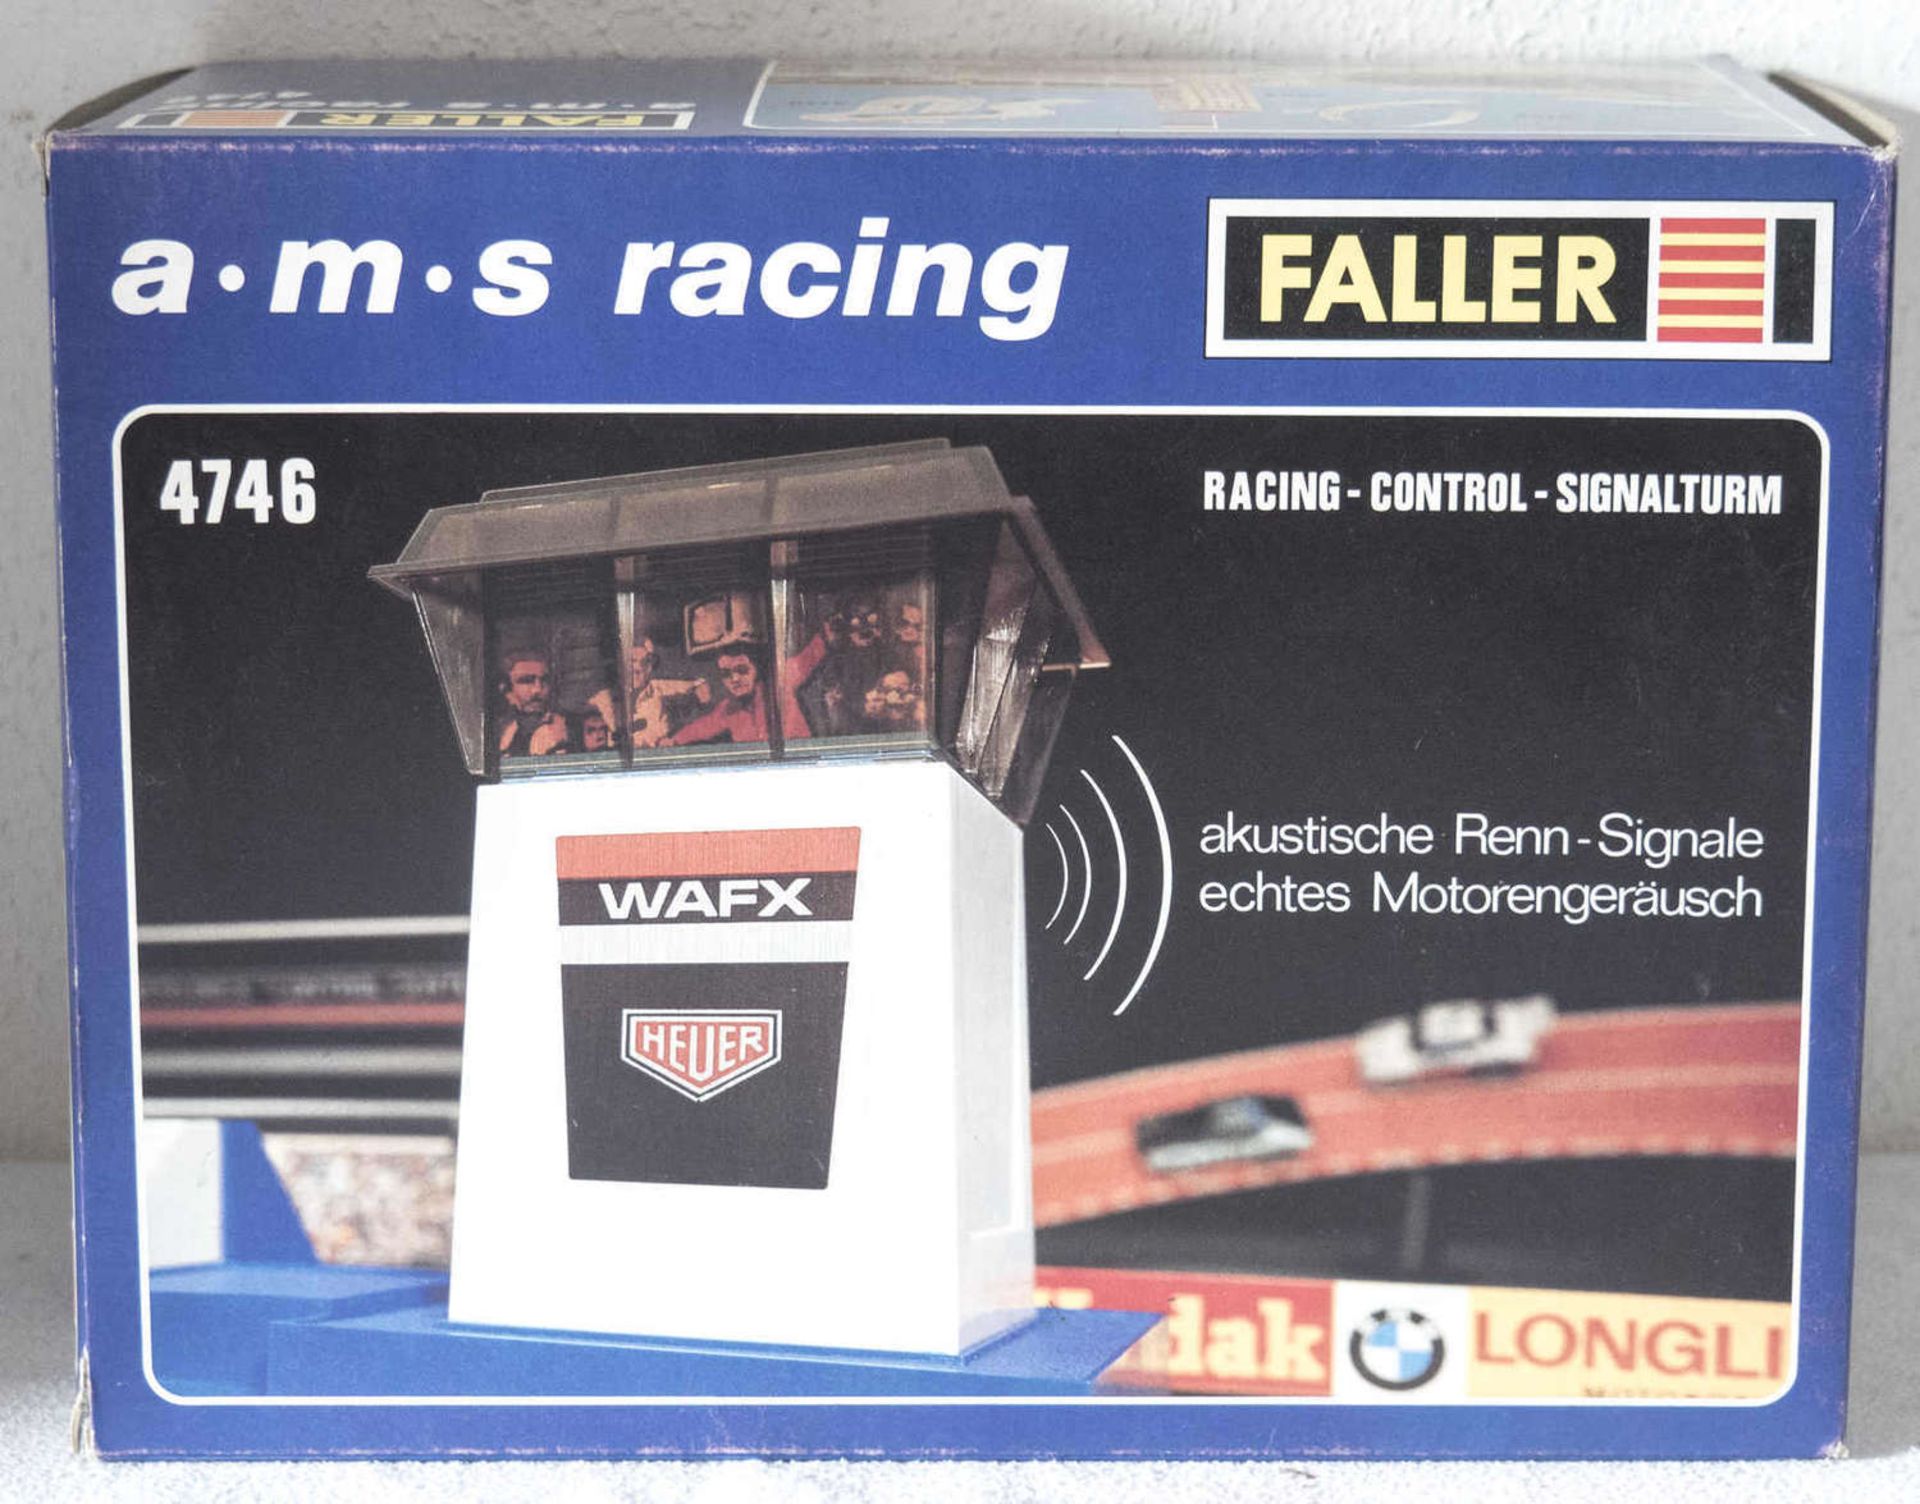 Faller ams racing 4746, Racing - Control - Signalturm. Neu in OVP. OVP mit Lagerspuren. Faller ams